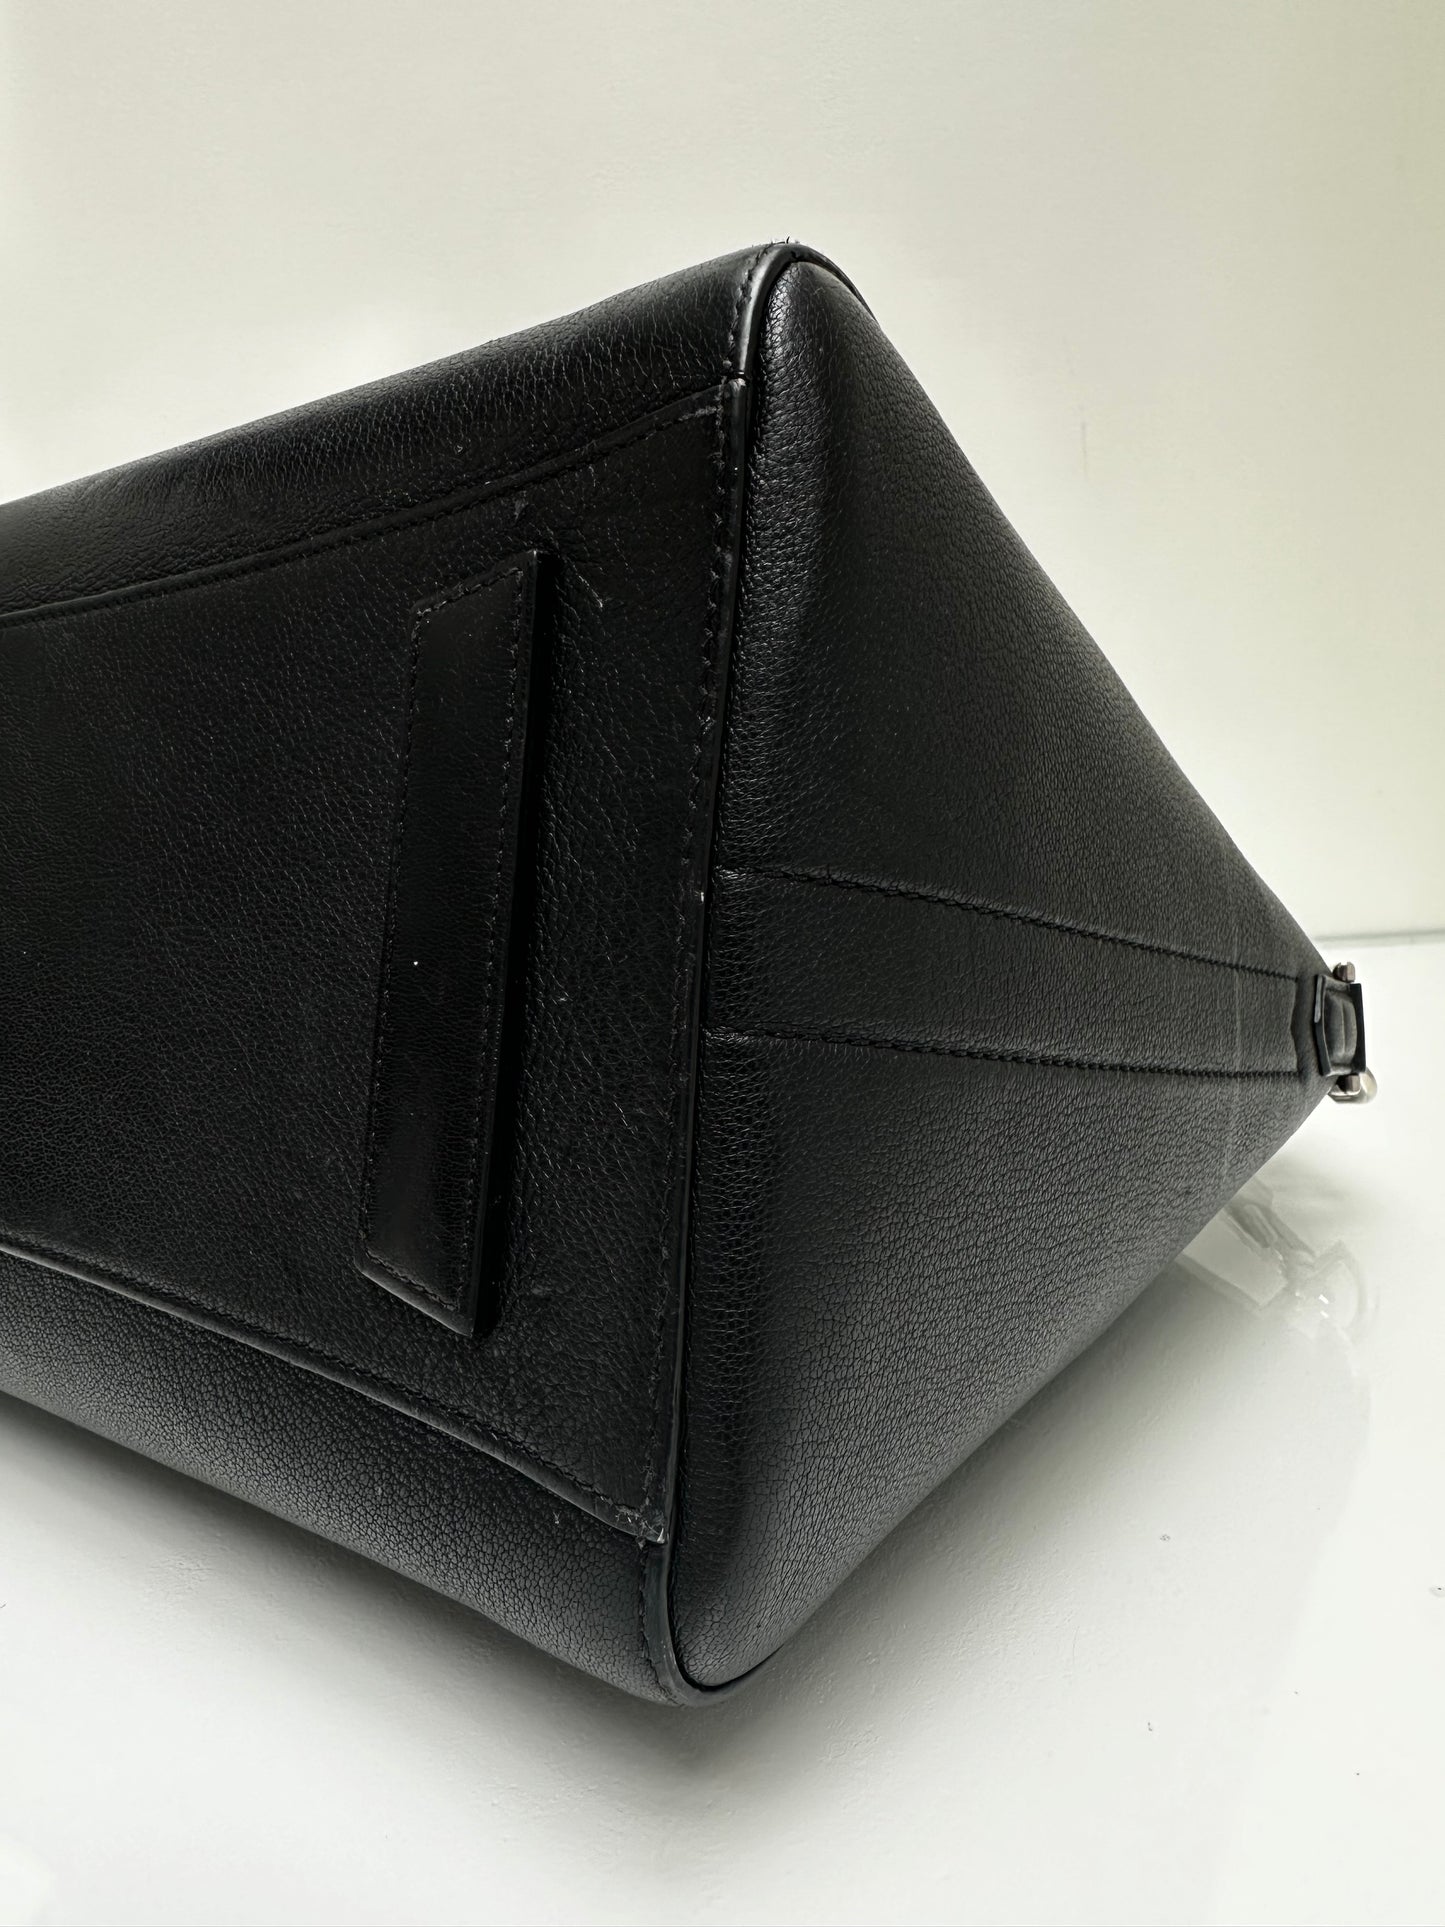 Givenchy Black Antigona Leather Tote